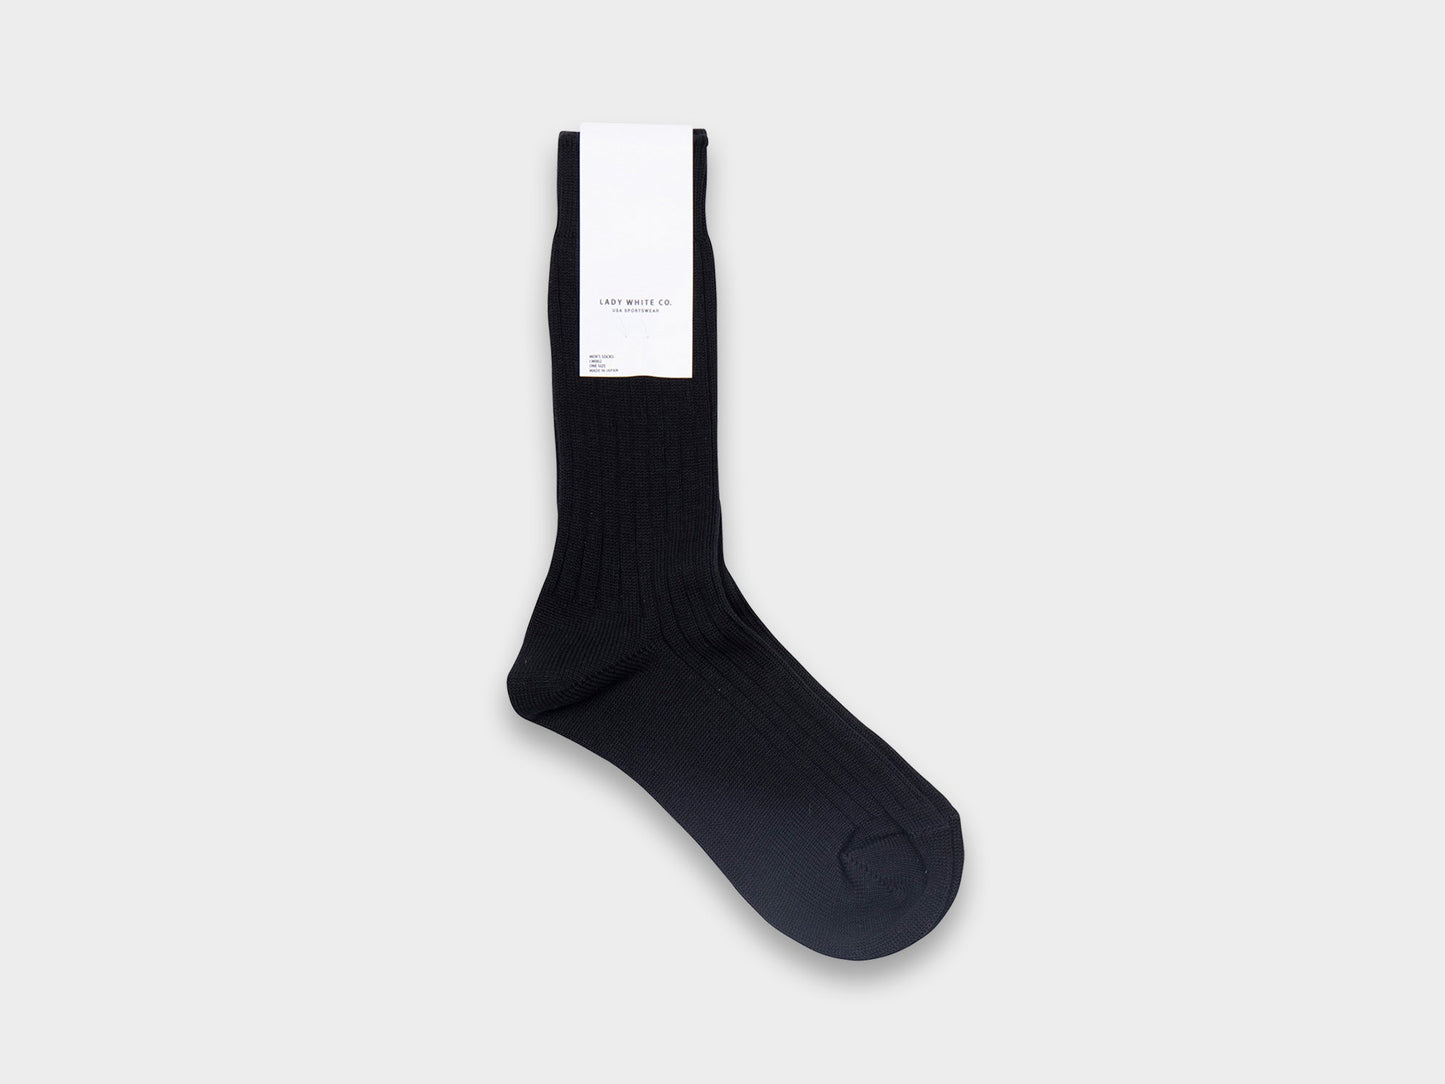 Lady White Co. Athletic Sock Black